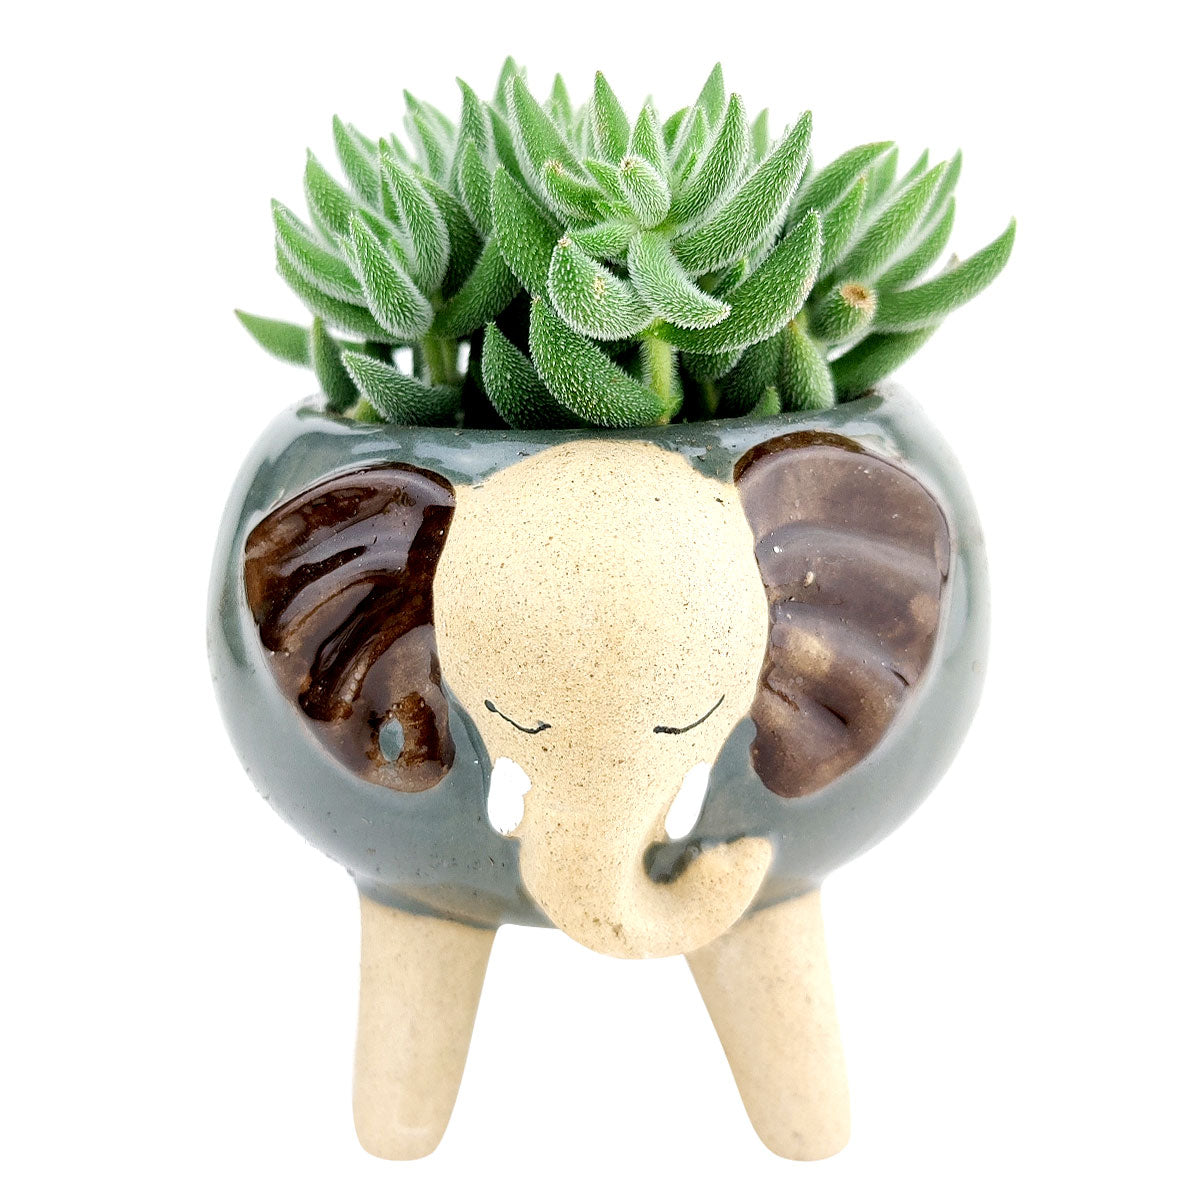 Elephant Ceramic Flower Pot, Elephant Ceramic Pot for sale, Small Succulent and Cactus Pot, Elegant Animal Desk Decor, Home Decor Office Decor, Cute elephant ceramic succulent planter pot, succulent gift ideas